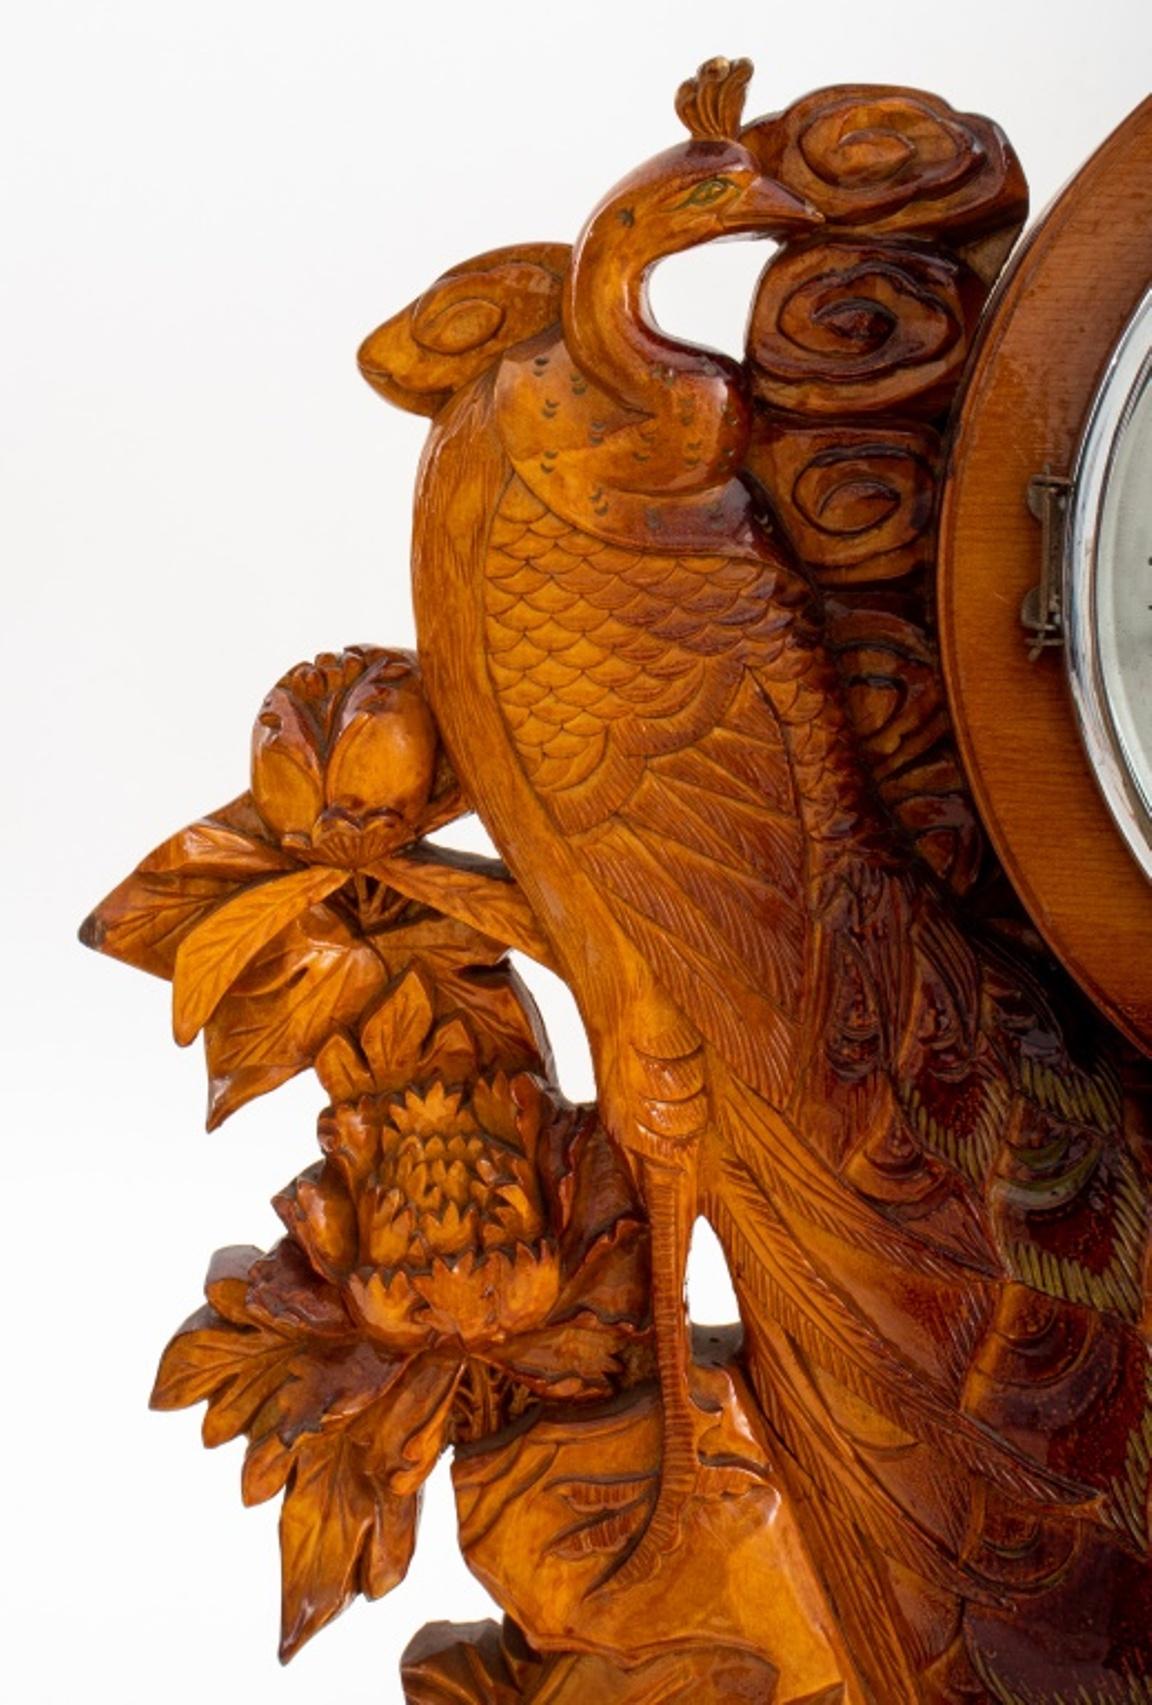 peacock table clock